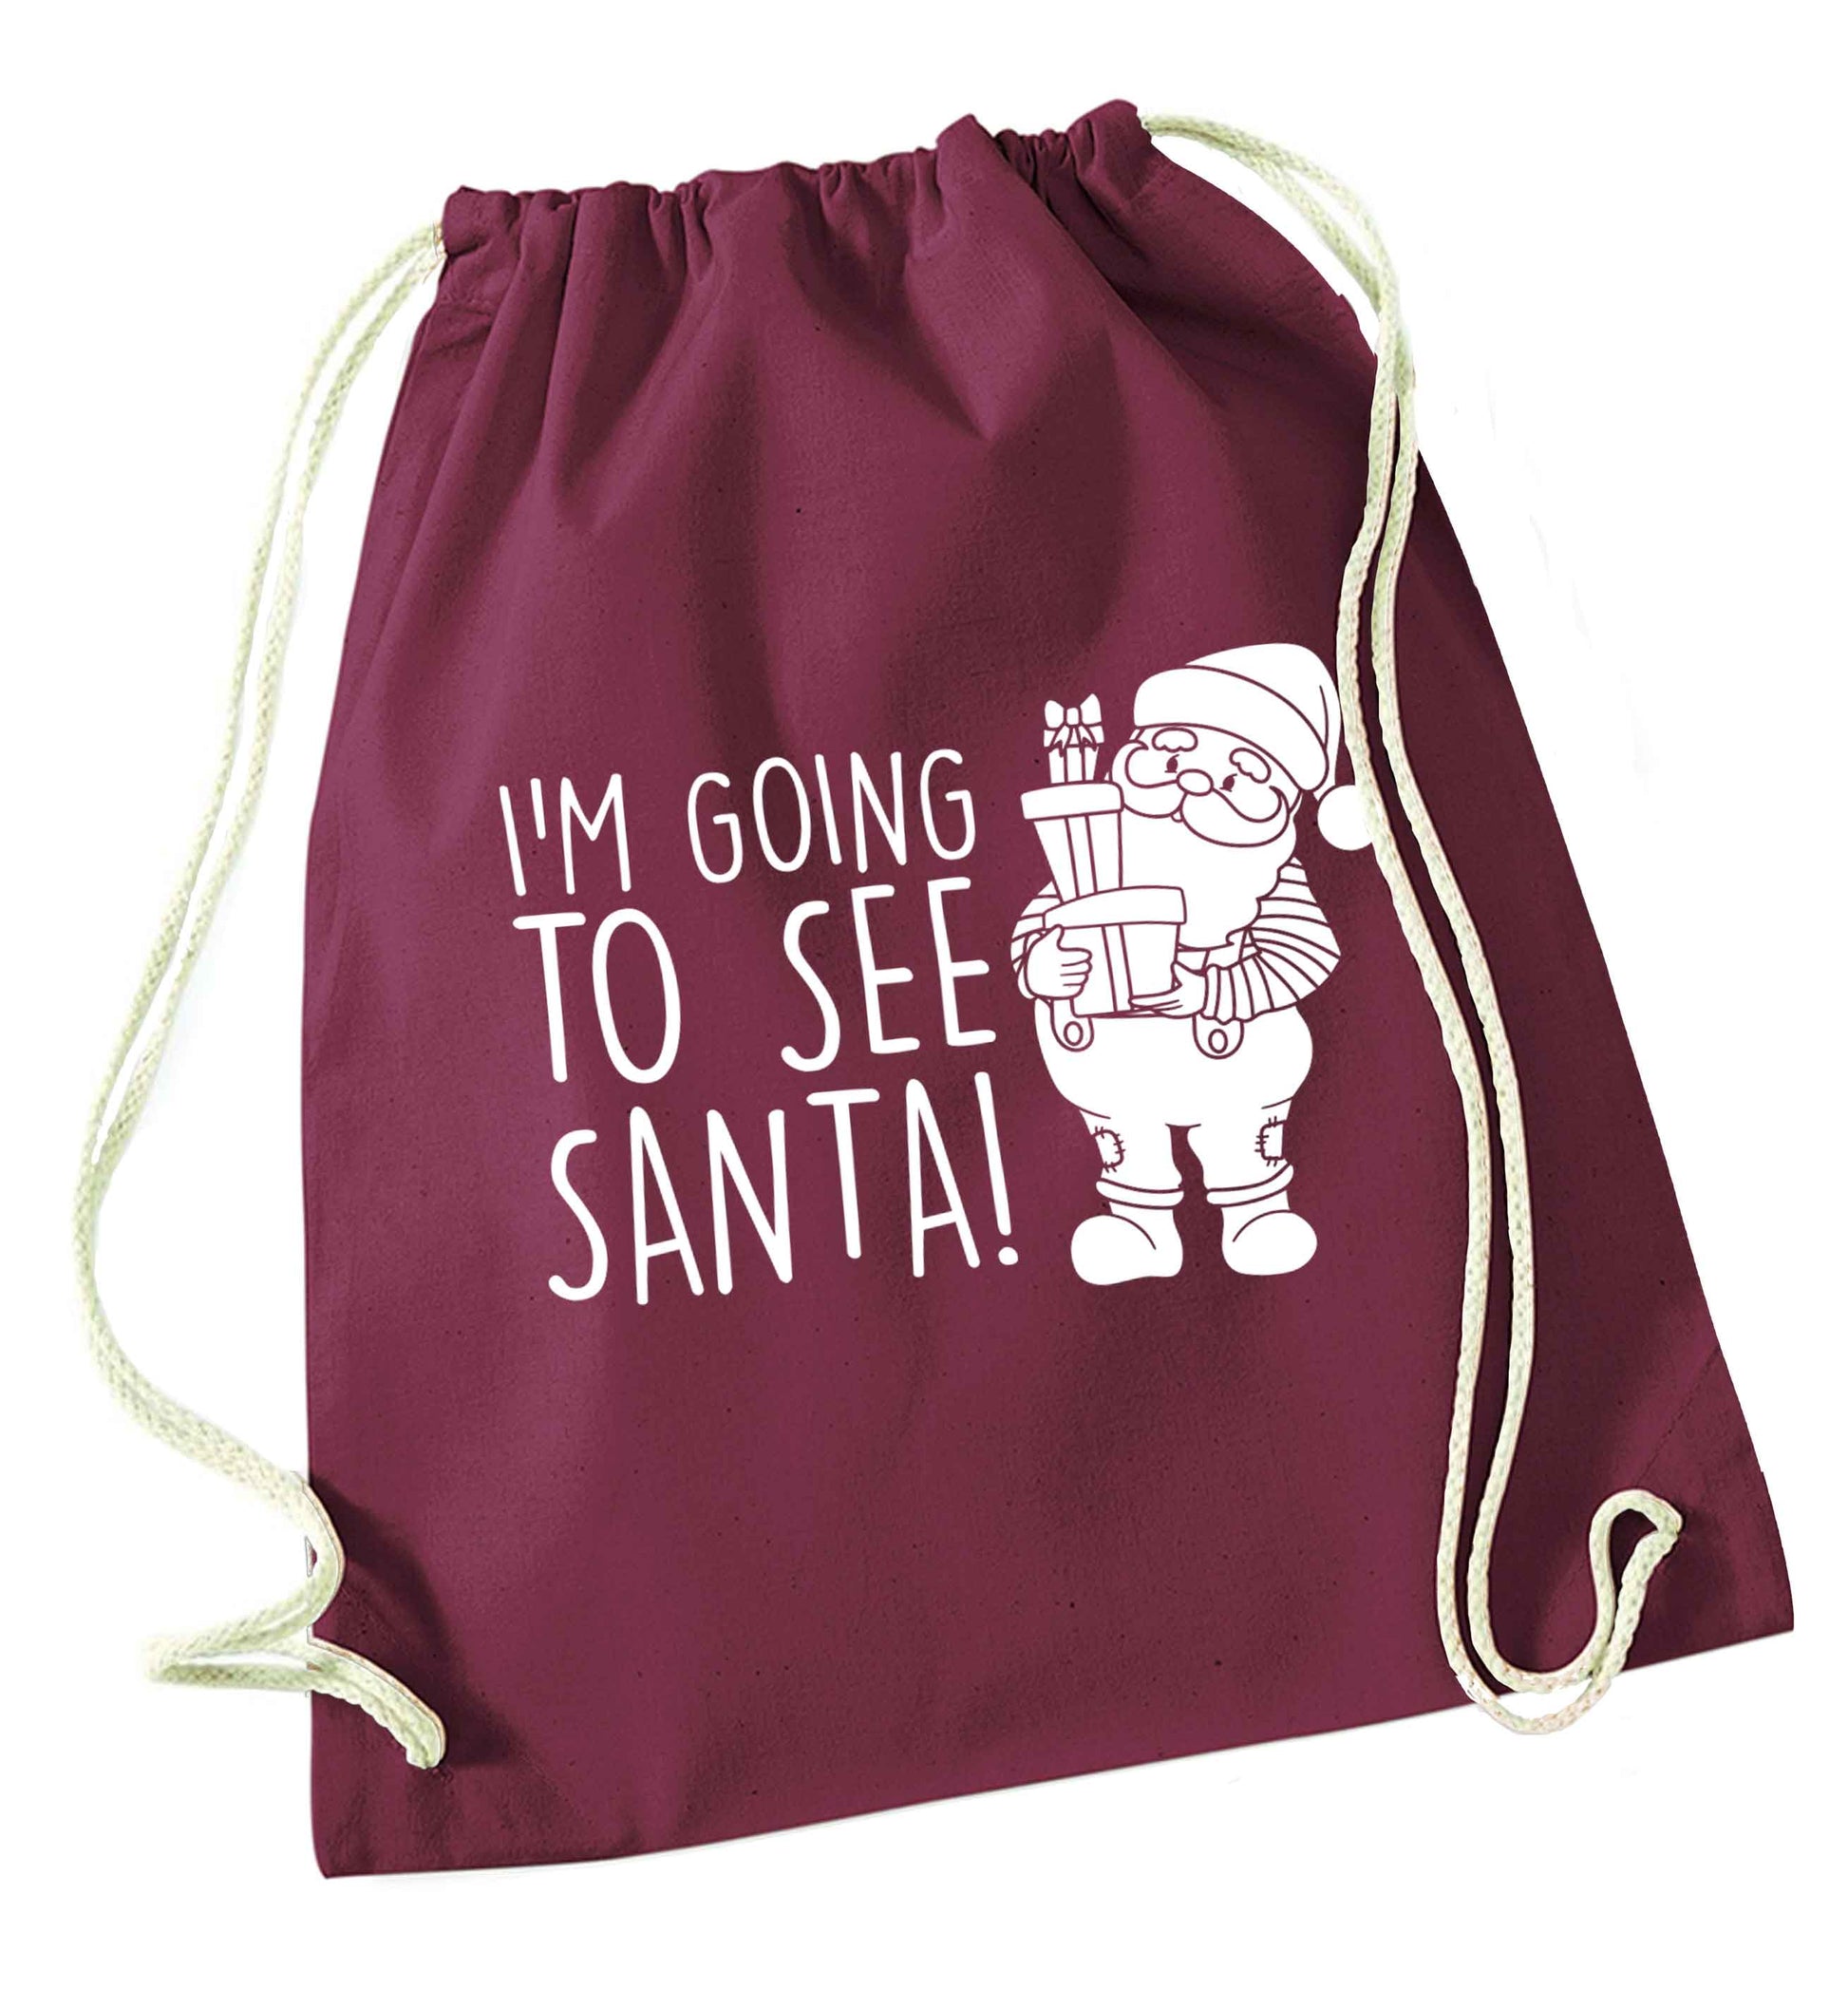 Merry Christmas maroon drawstring bag